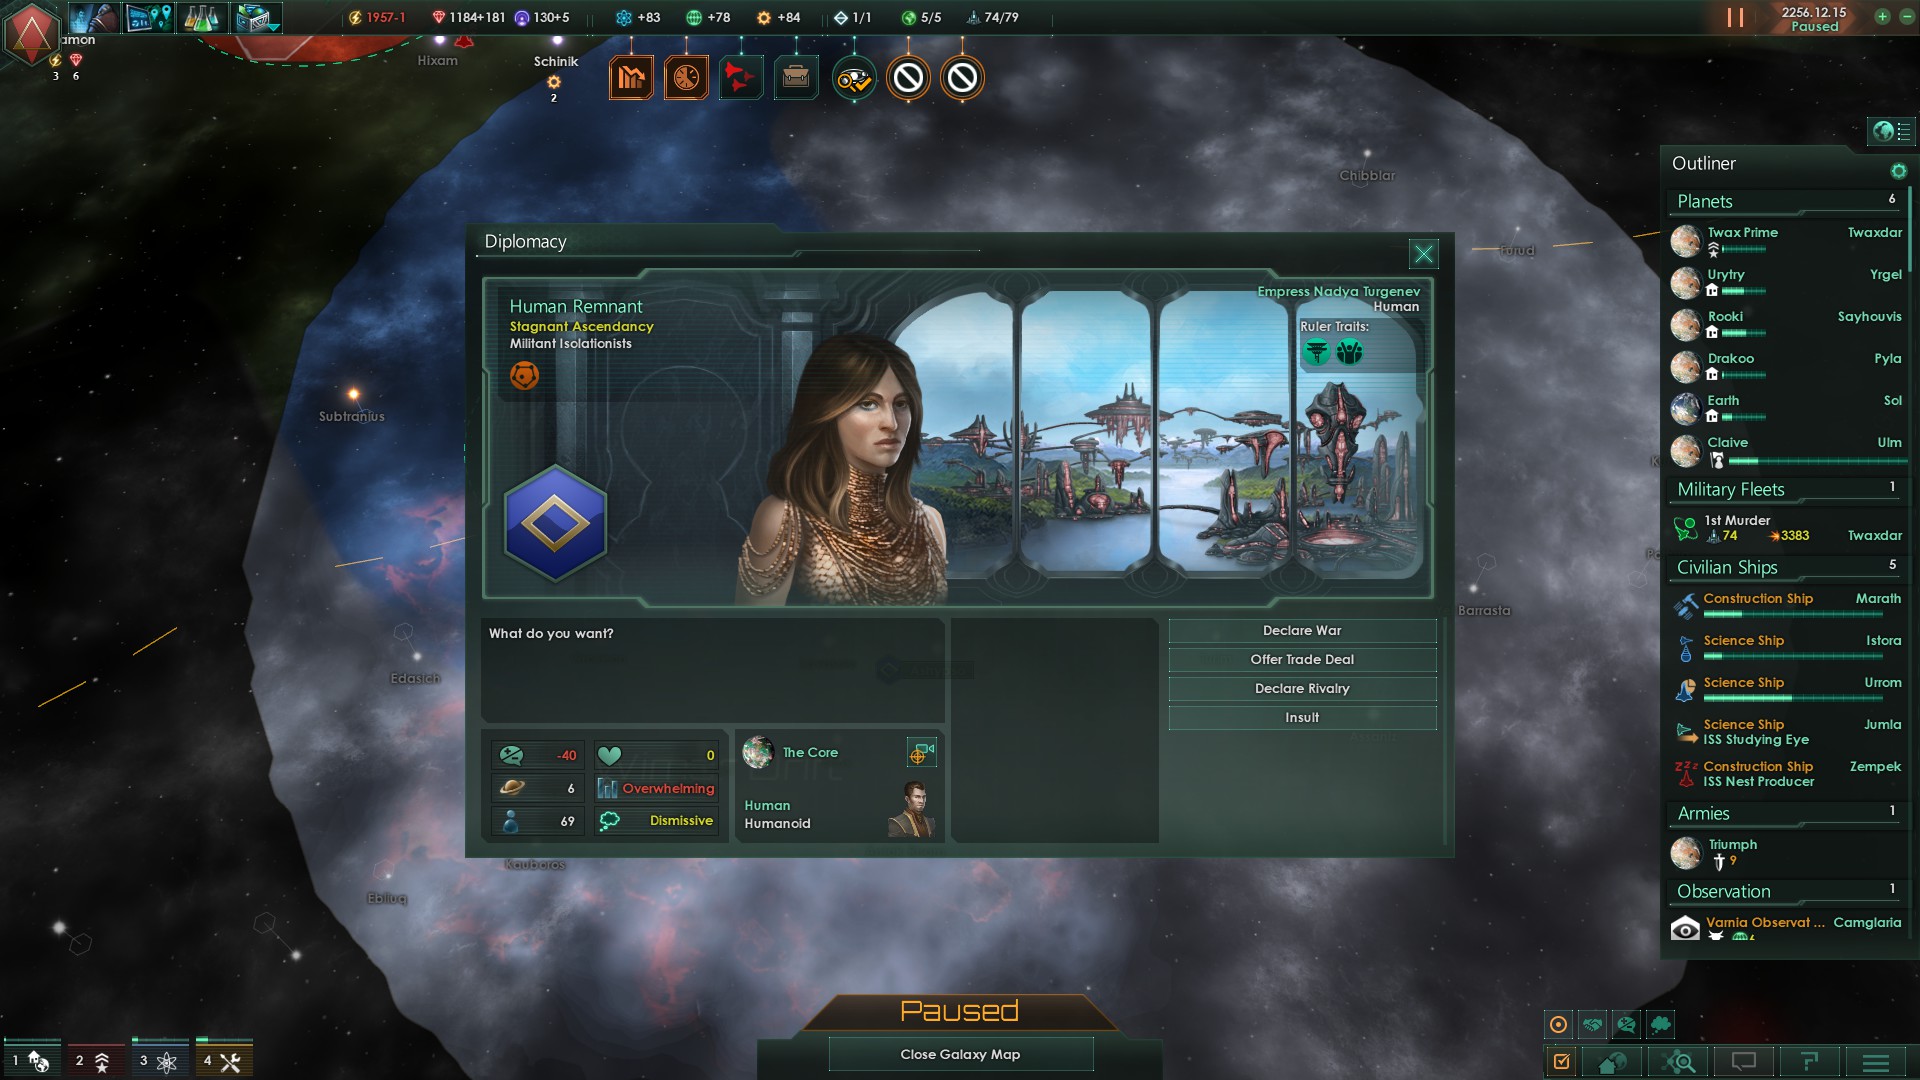 Human Remnant fallen empire. Huh? : Stellaris